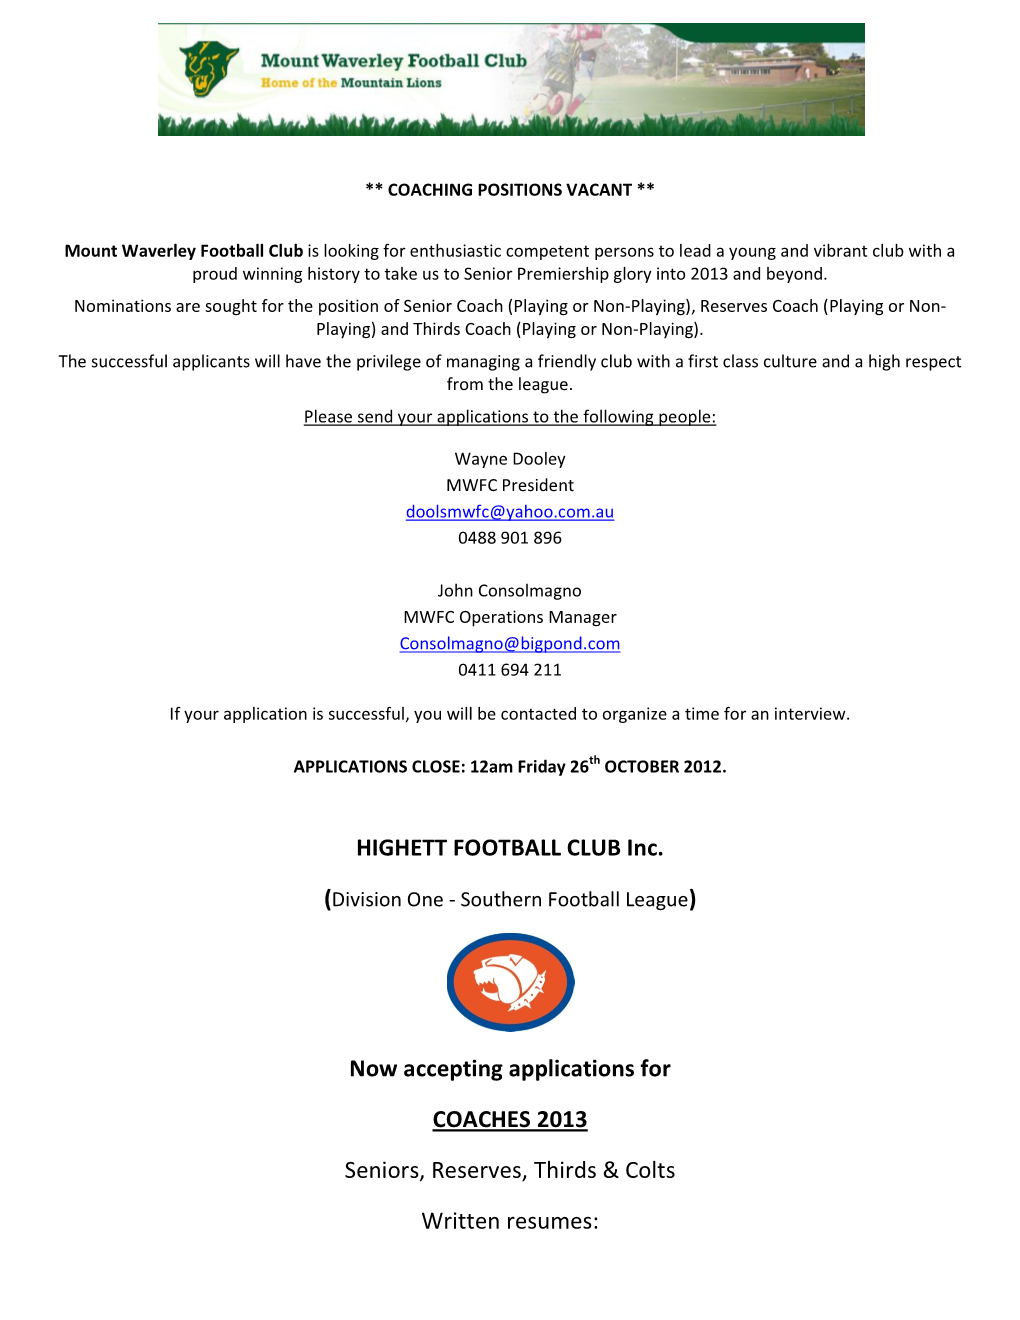 HIGHETT FOOTBALL CLUB Inc. Now Accepting Applications For